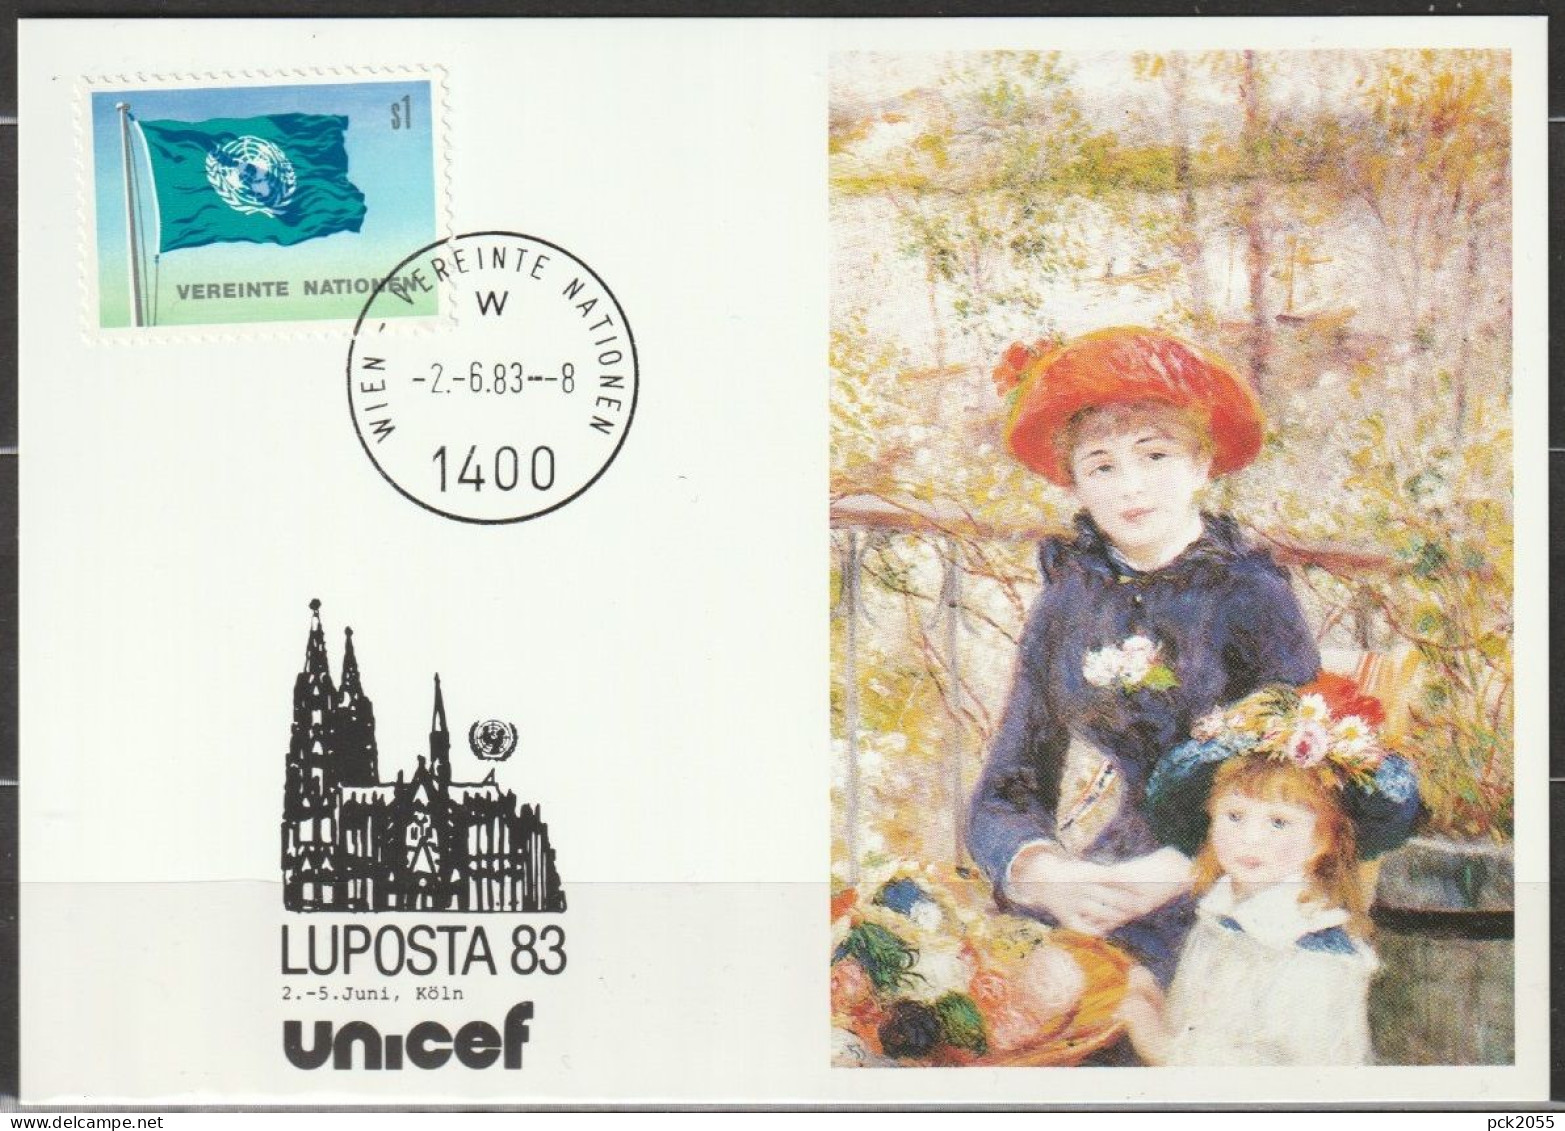 UNO Wien 1983 UNICEF Kunstkarte Sonderstempel LUPOSTA83 Köln MiNr.2   ( D 6997 ) - Briefe U. Dokumente